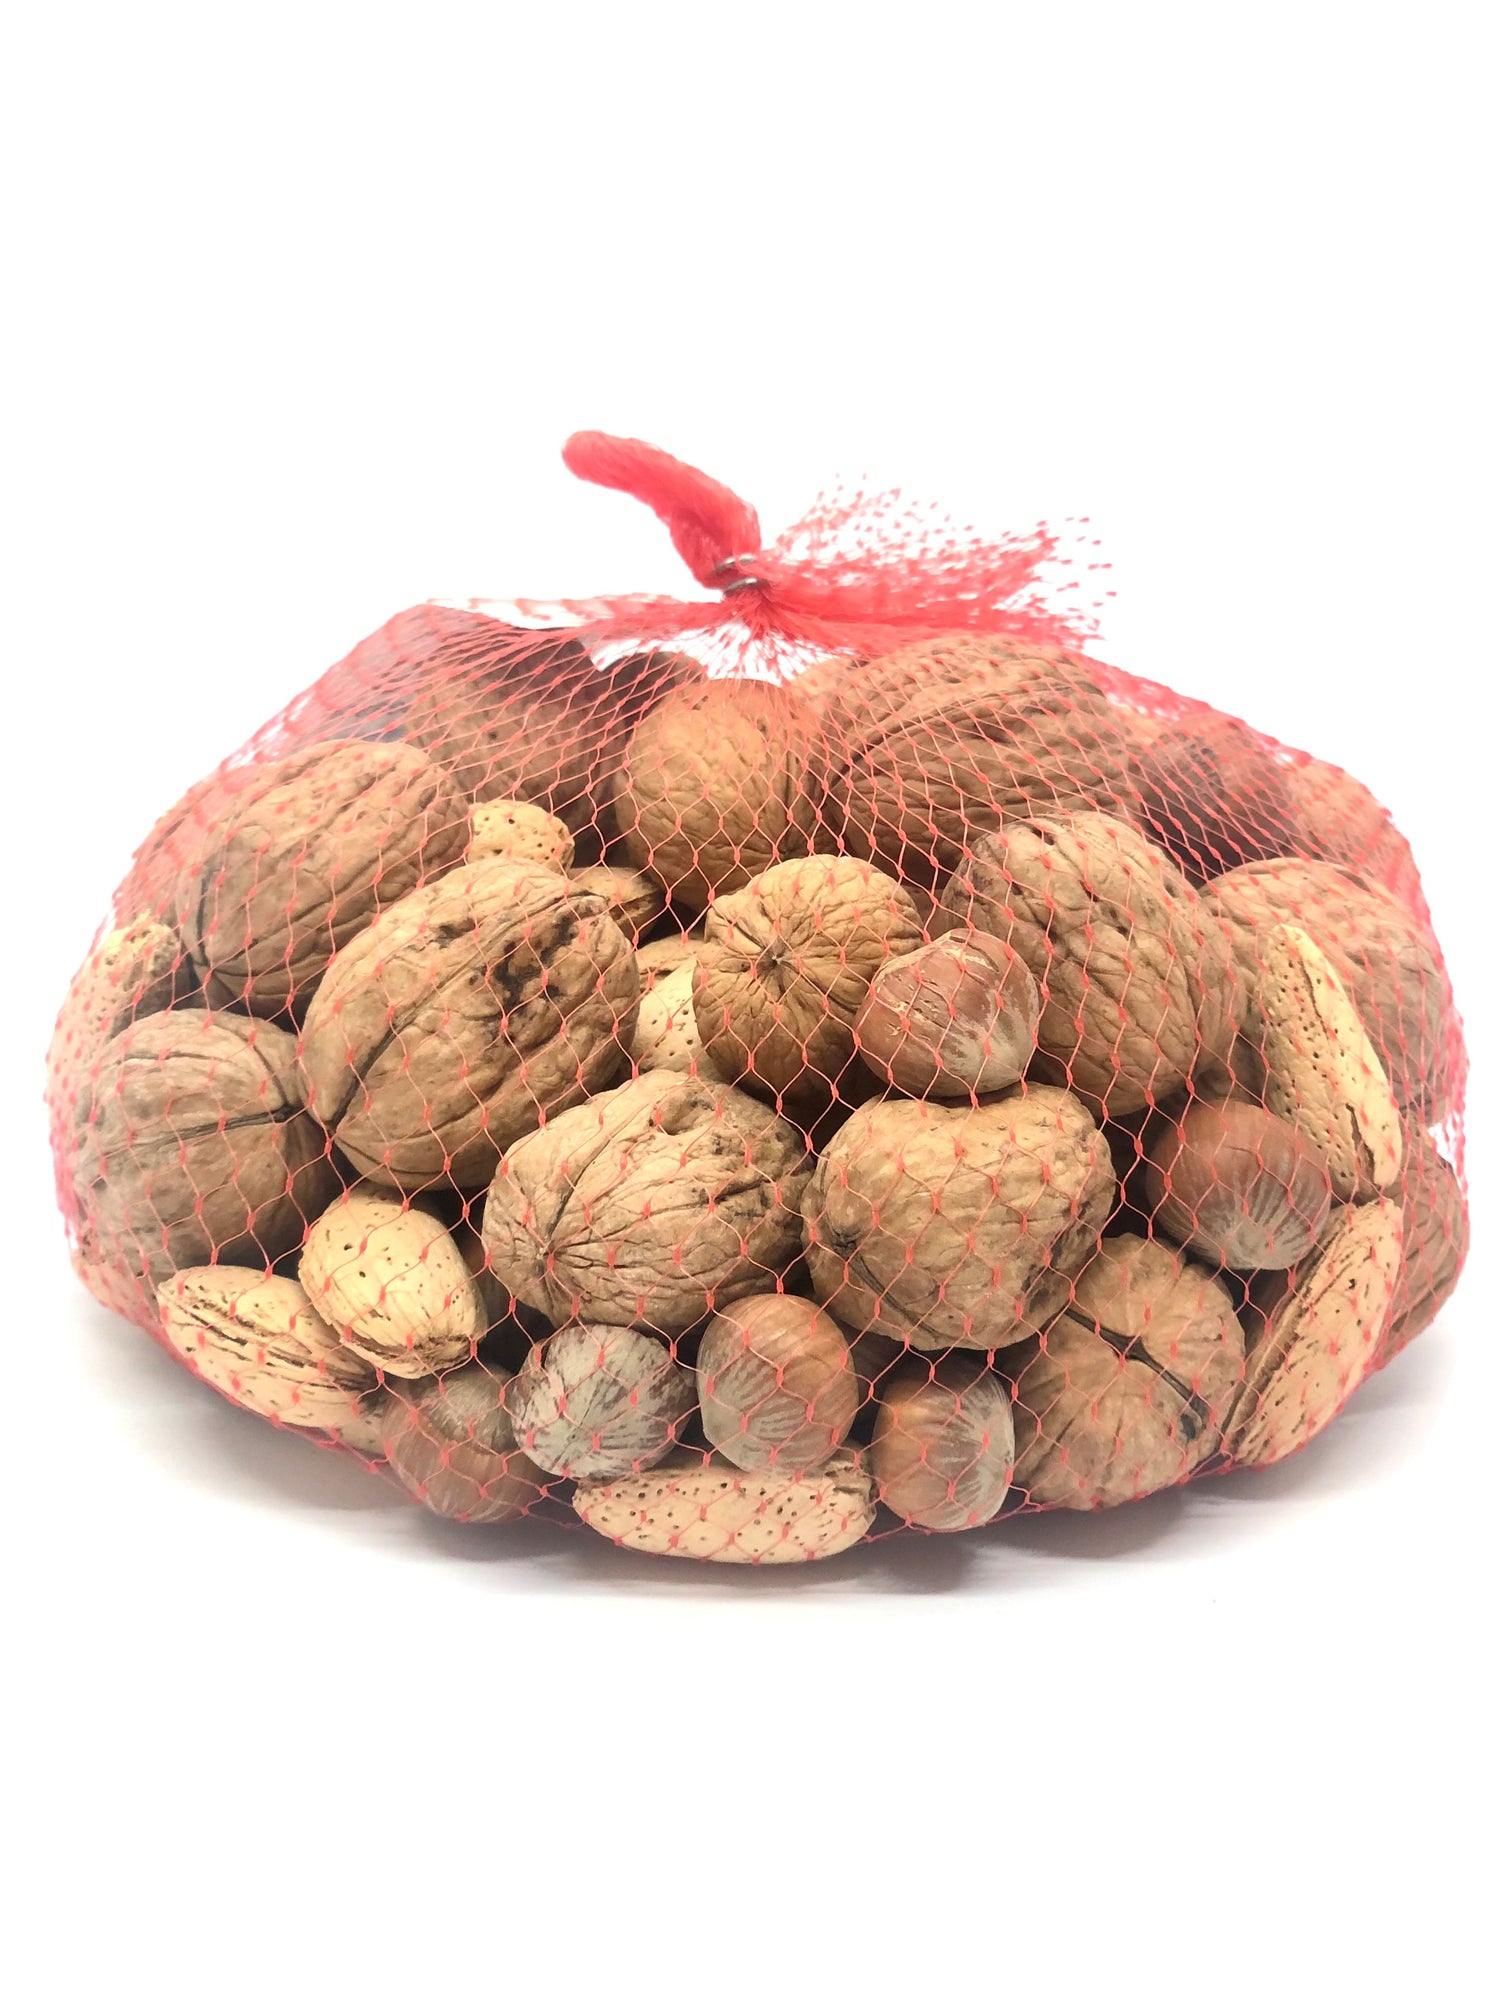 Australian mixed nuts in shell